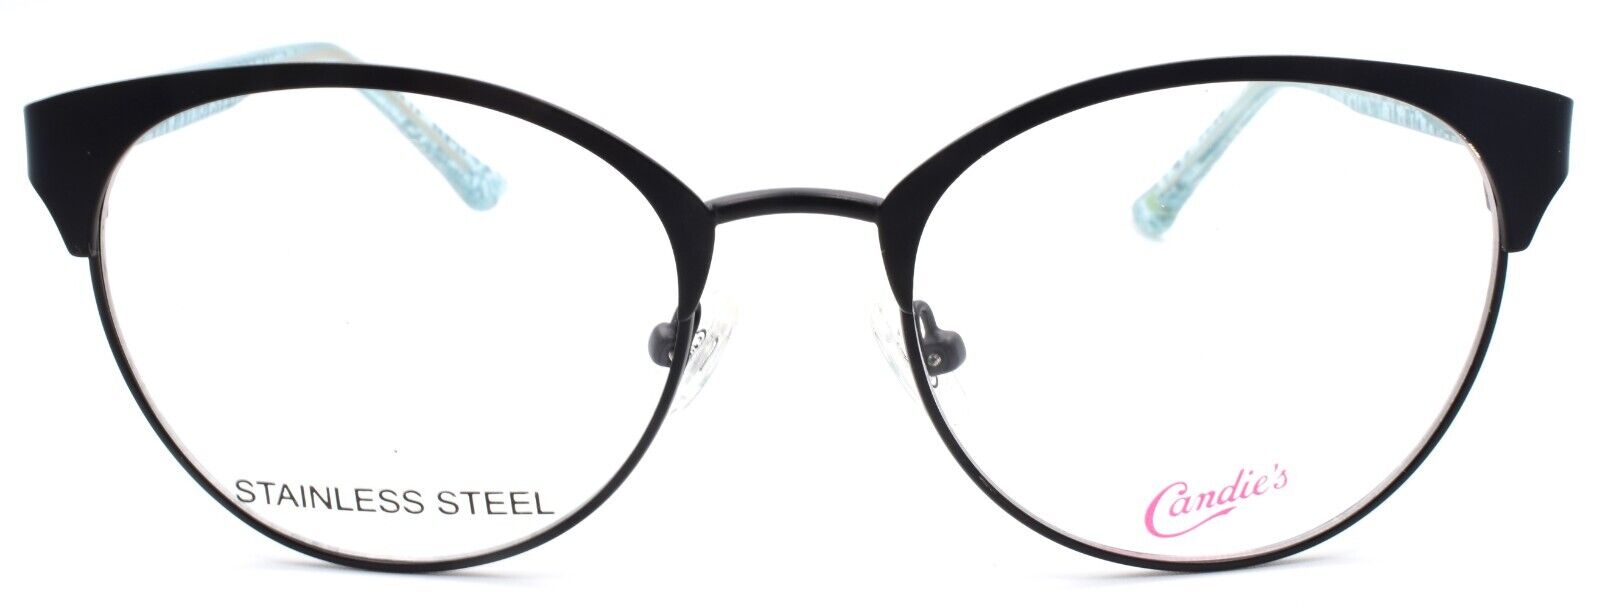 2-Candies CA0166 002 Women's Eyeglasses Frames 51-18-135 Matte Black-889214032232-IKSpecs